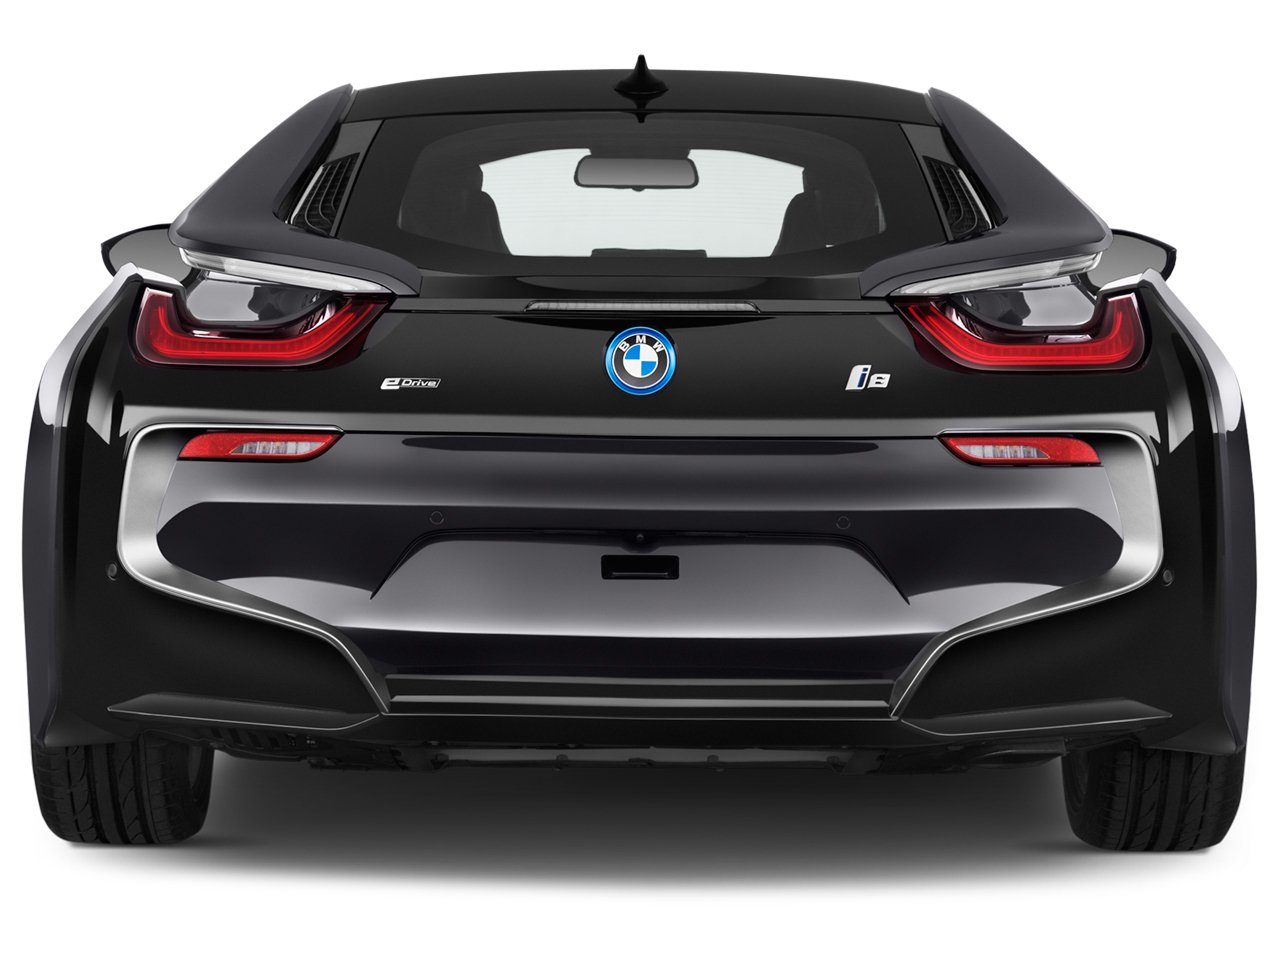 BMW i8 exterior - Rear